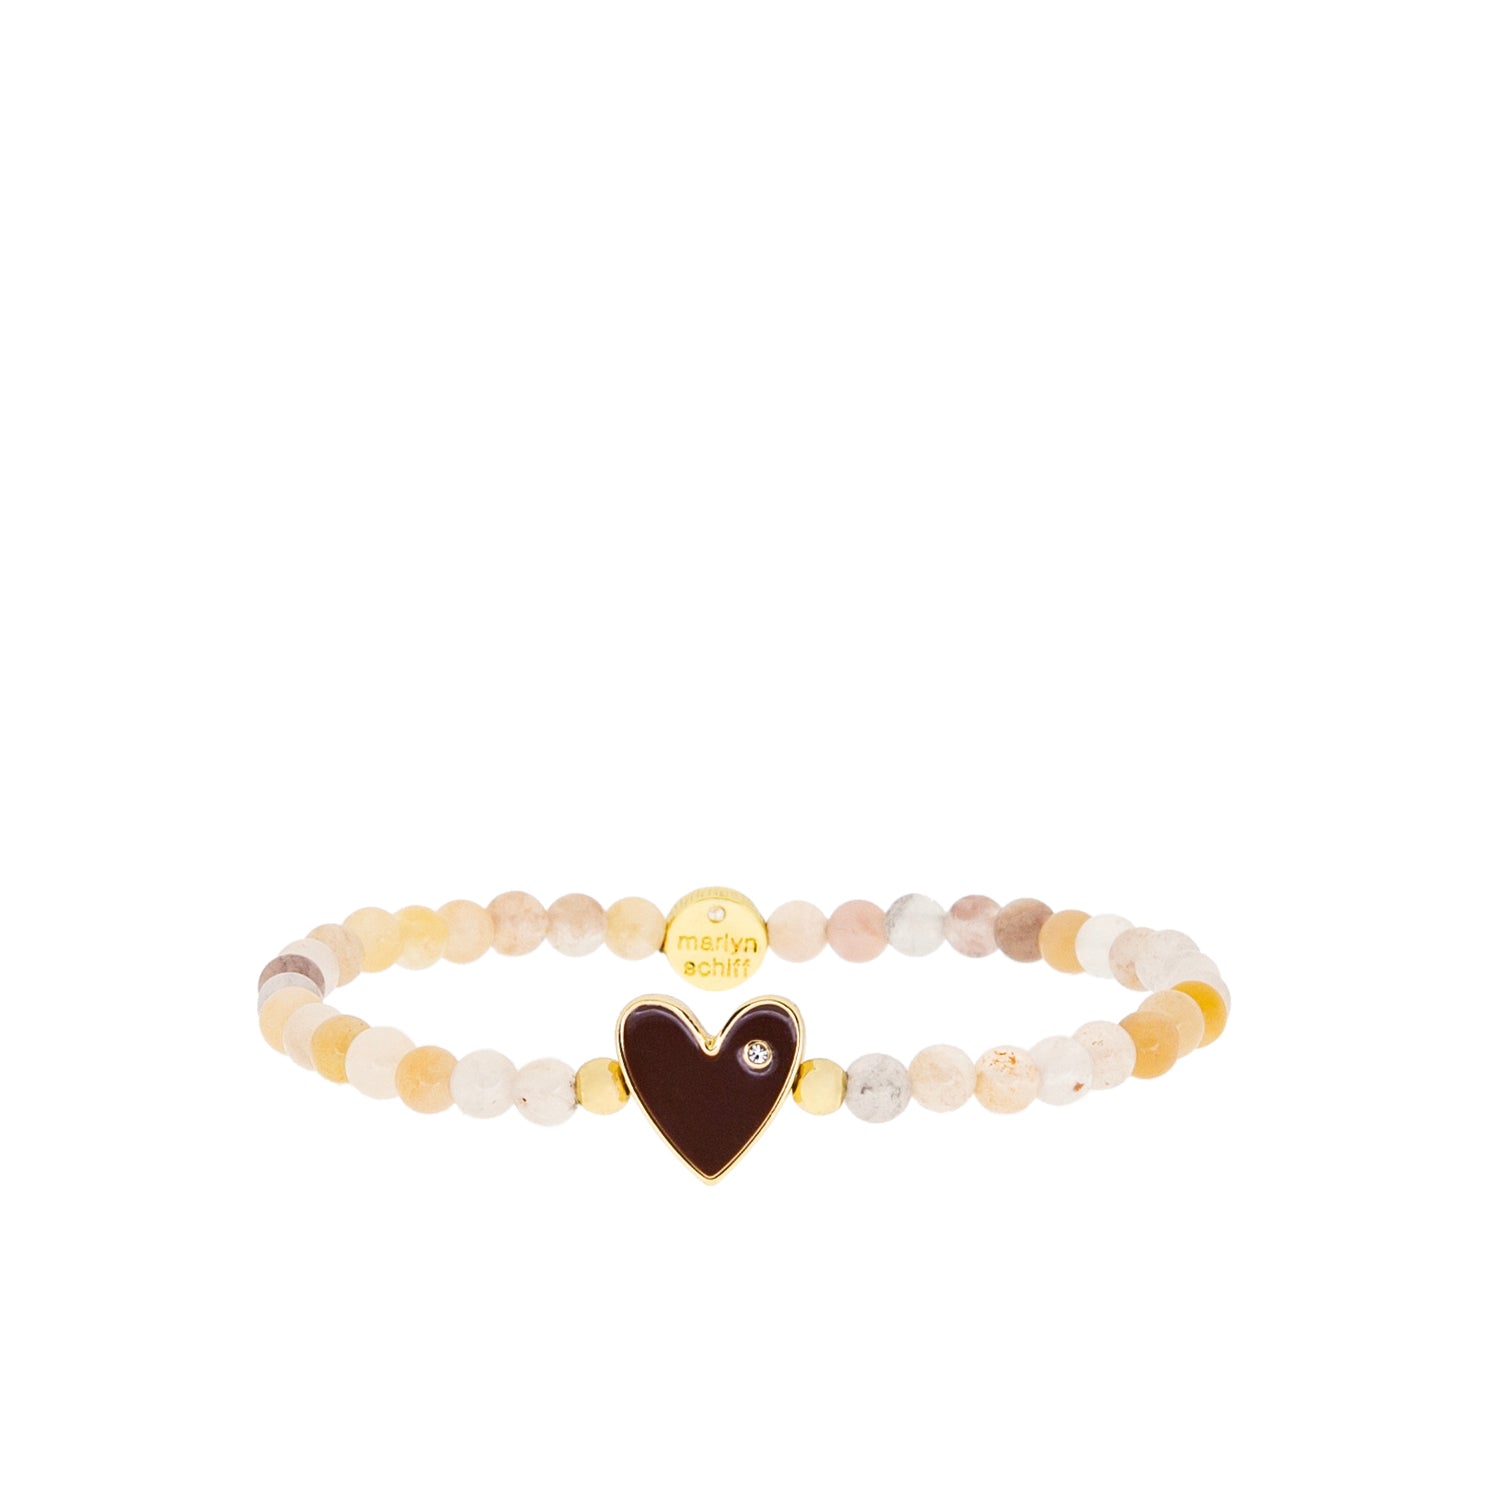 semi precious stone bracelet with heart